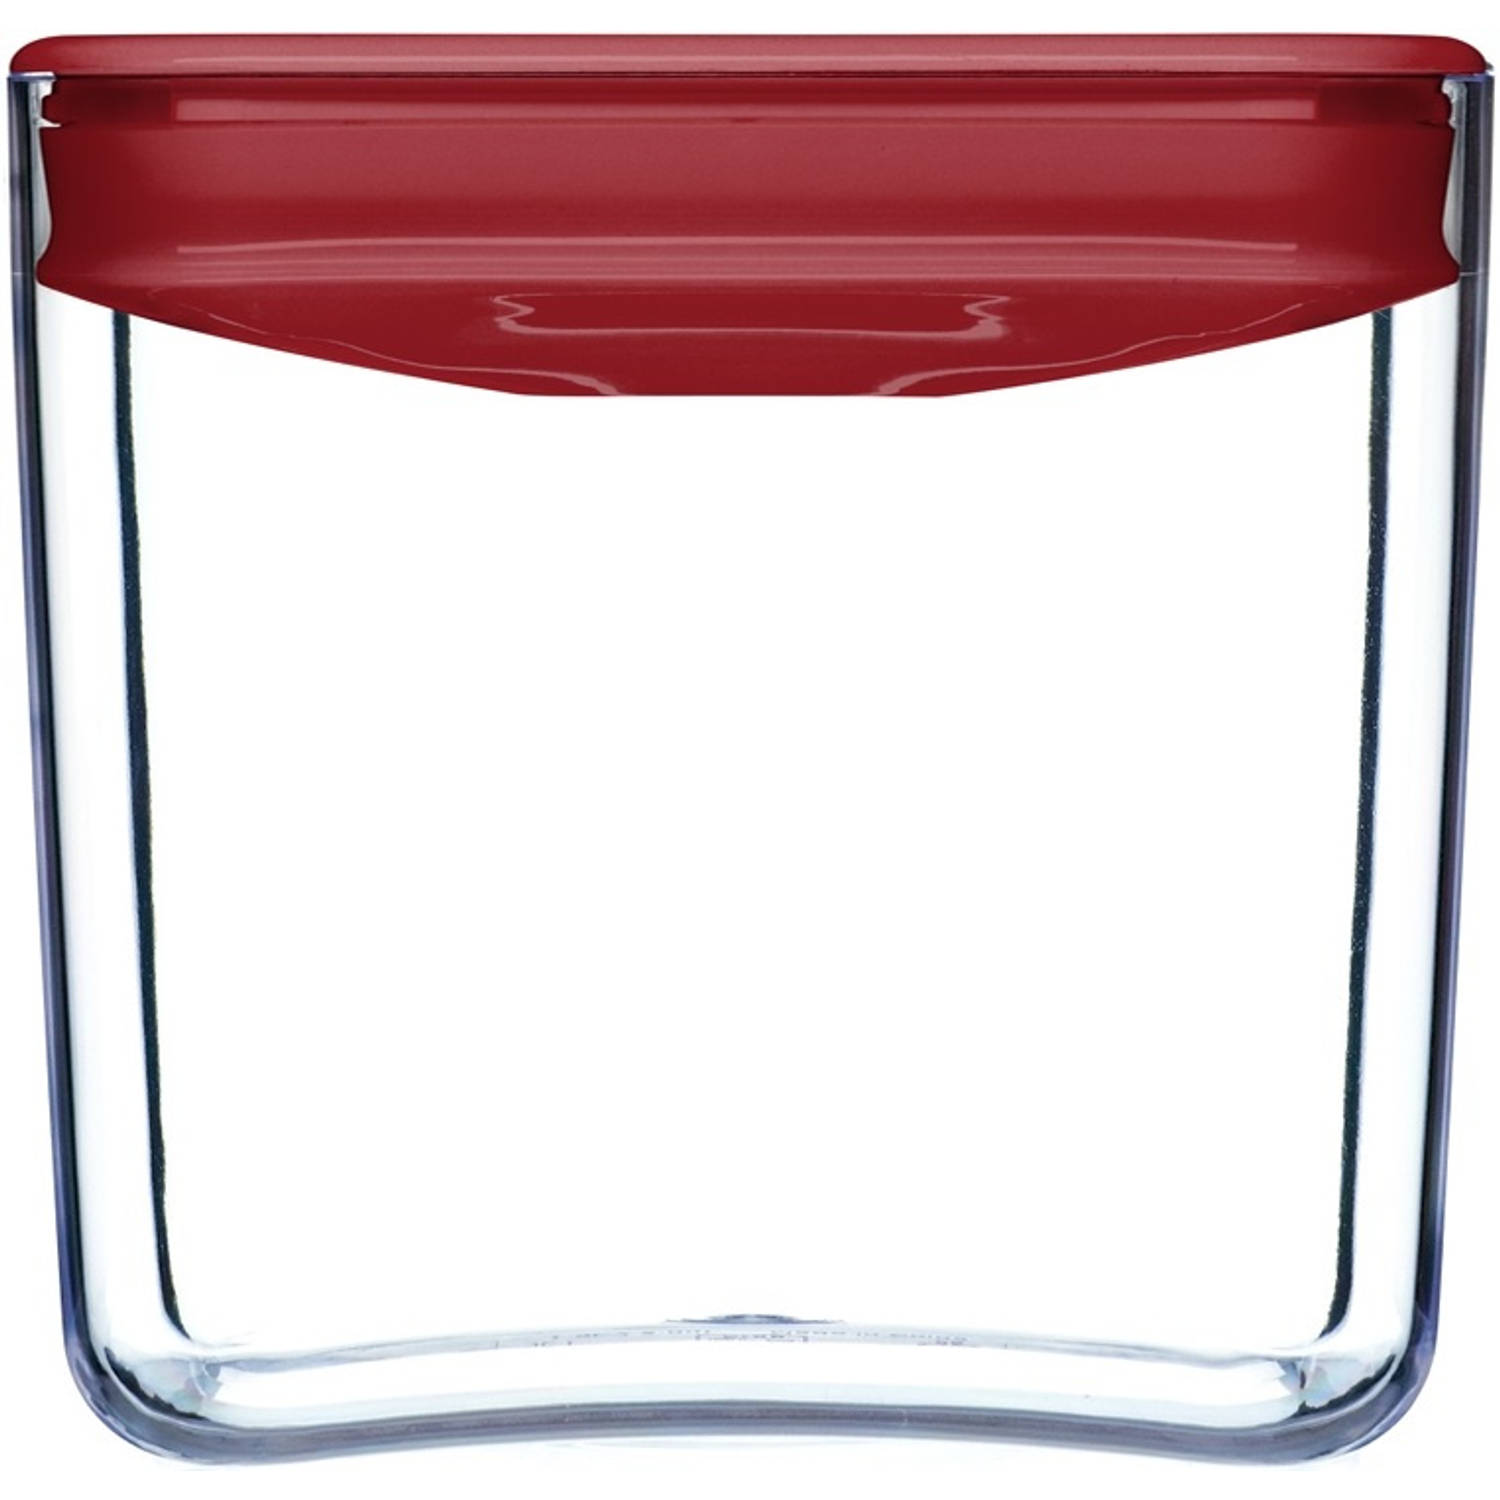 ClickClack Vershoudbox Pantry Cube - 1.9 Liter - Rood